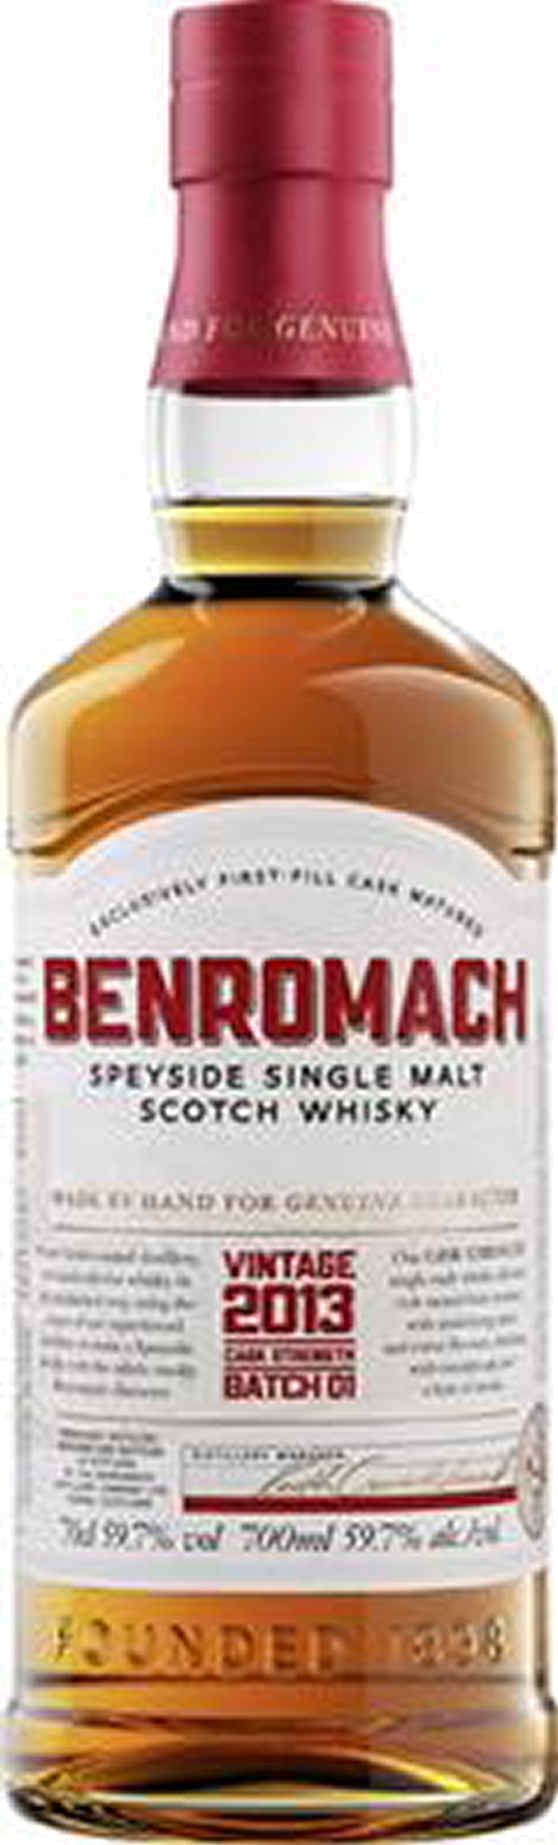 Benromach Cask Strength 2013 59,7%vol